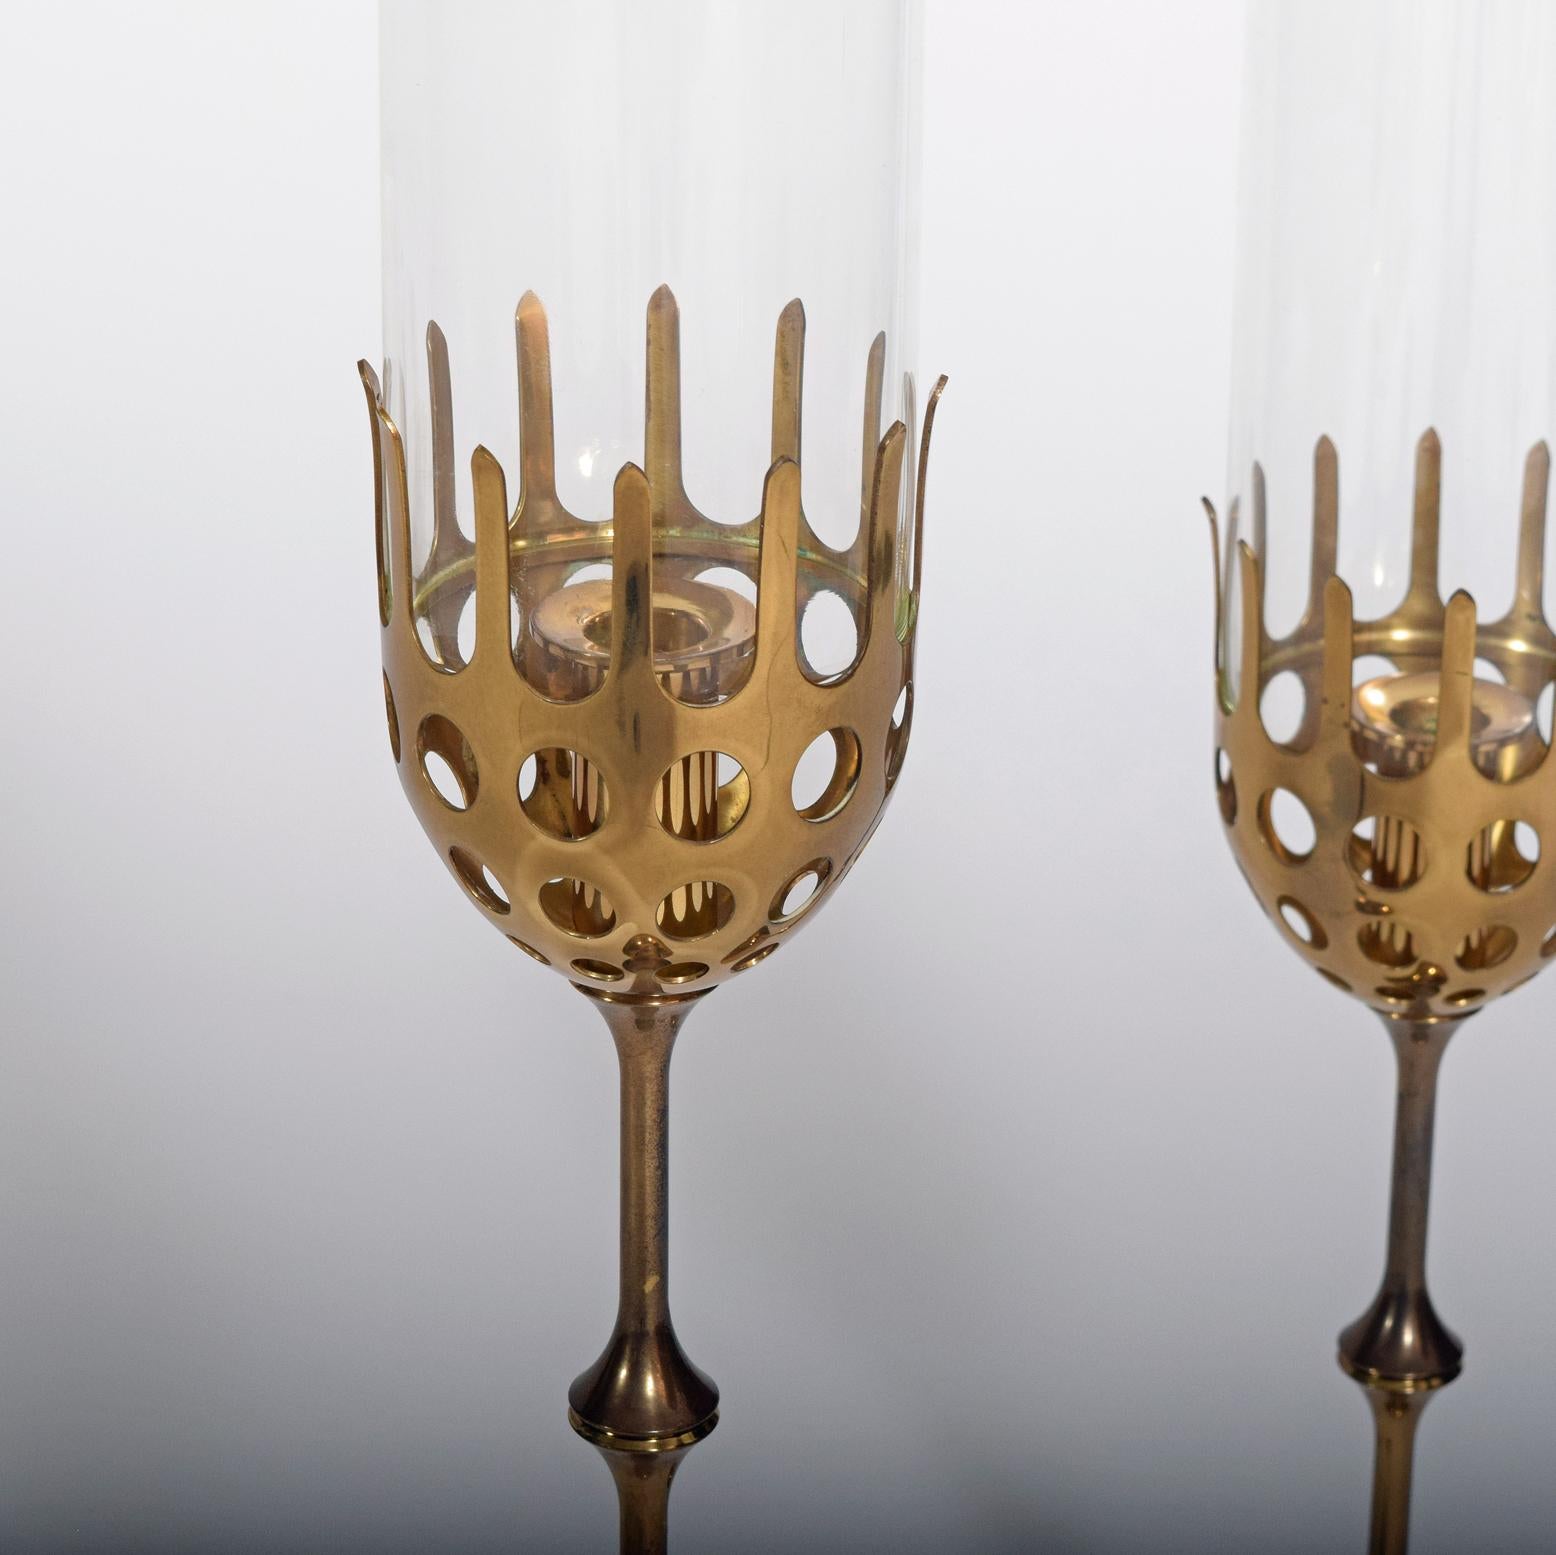 Bjørn Wiinblad: Two hurricane brass candlesticks with cylindrical clear glass shades. Marked monogram Bjørn Wiinblad, made in Denmark.